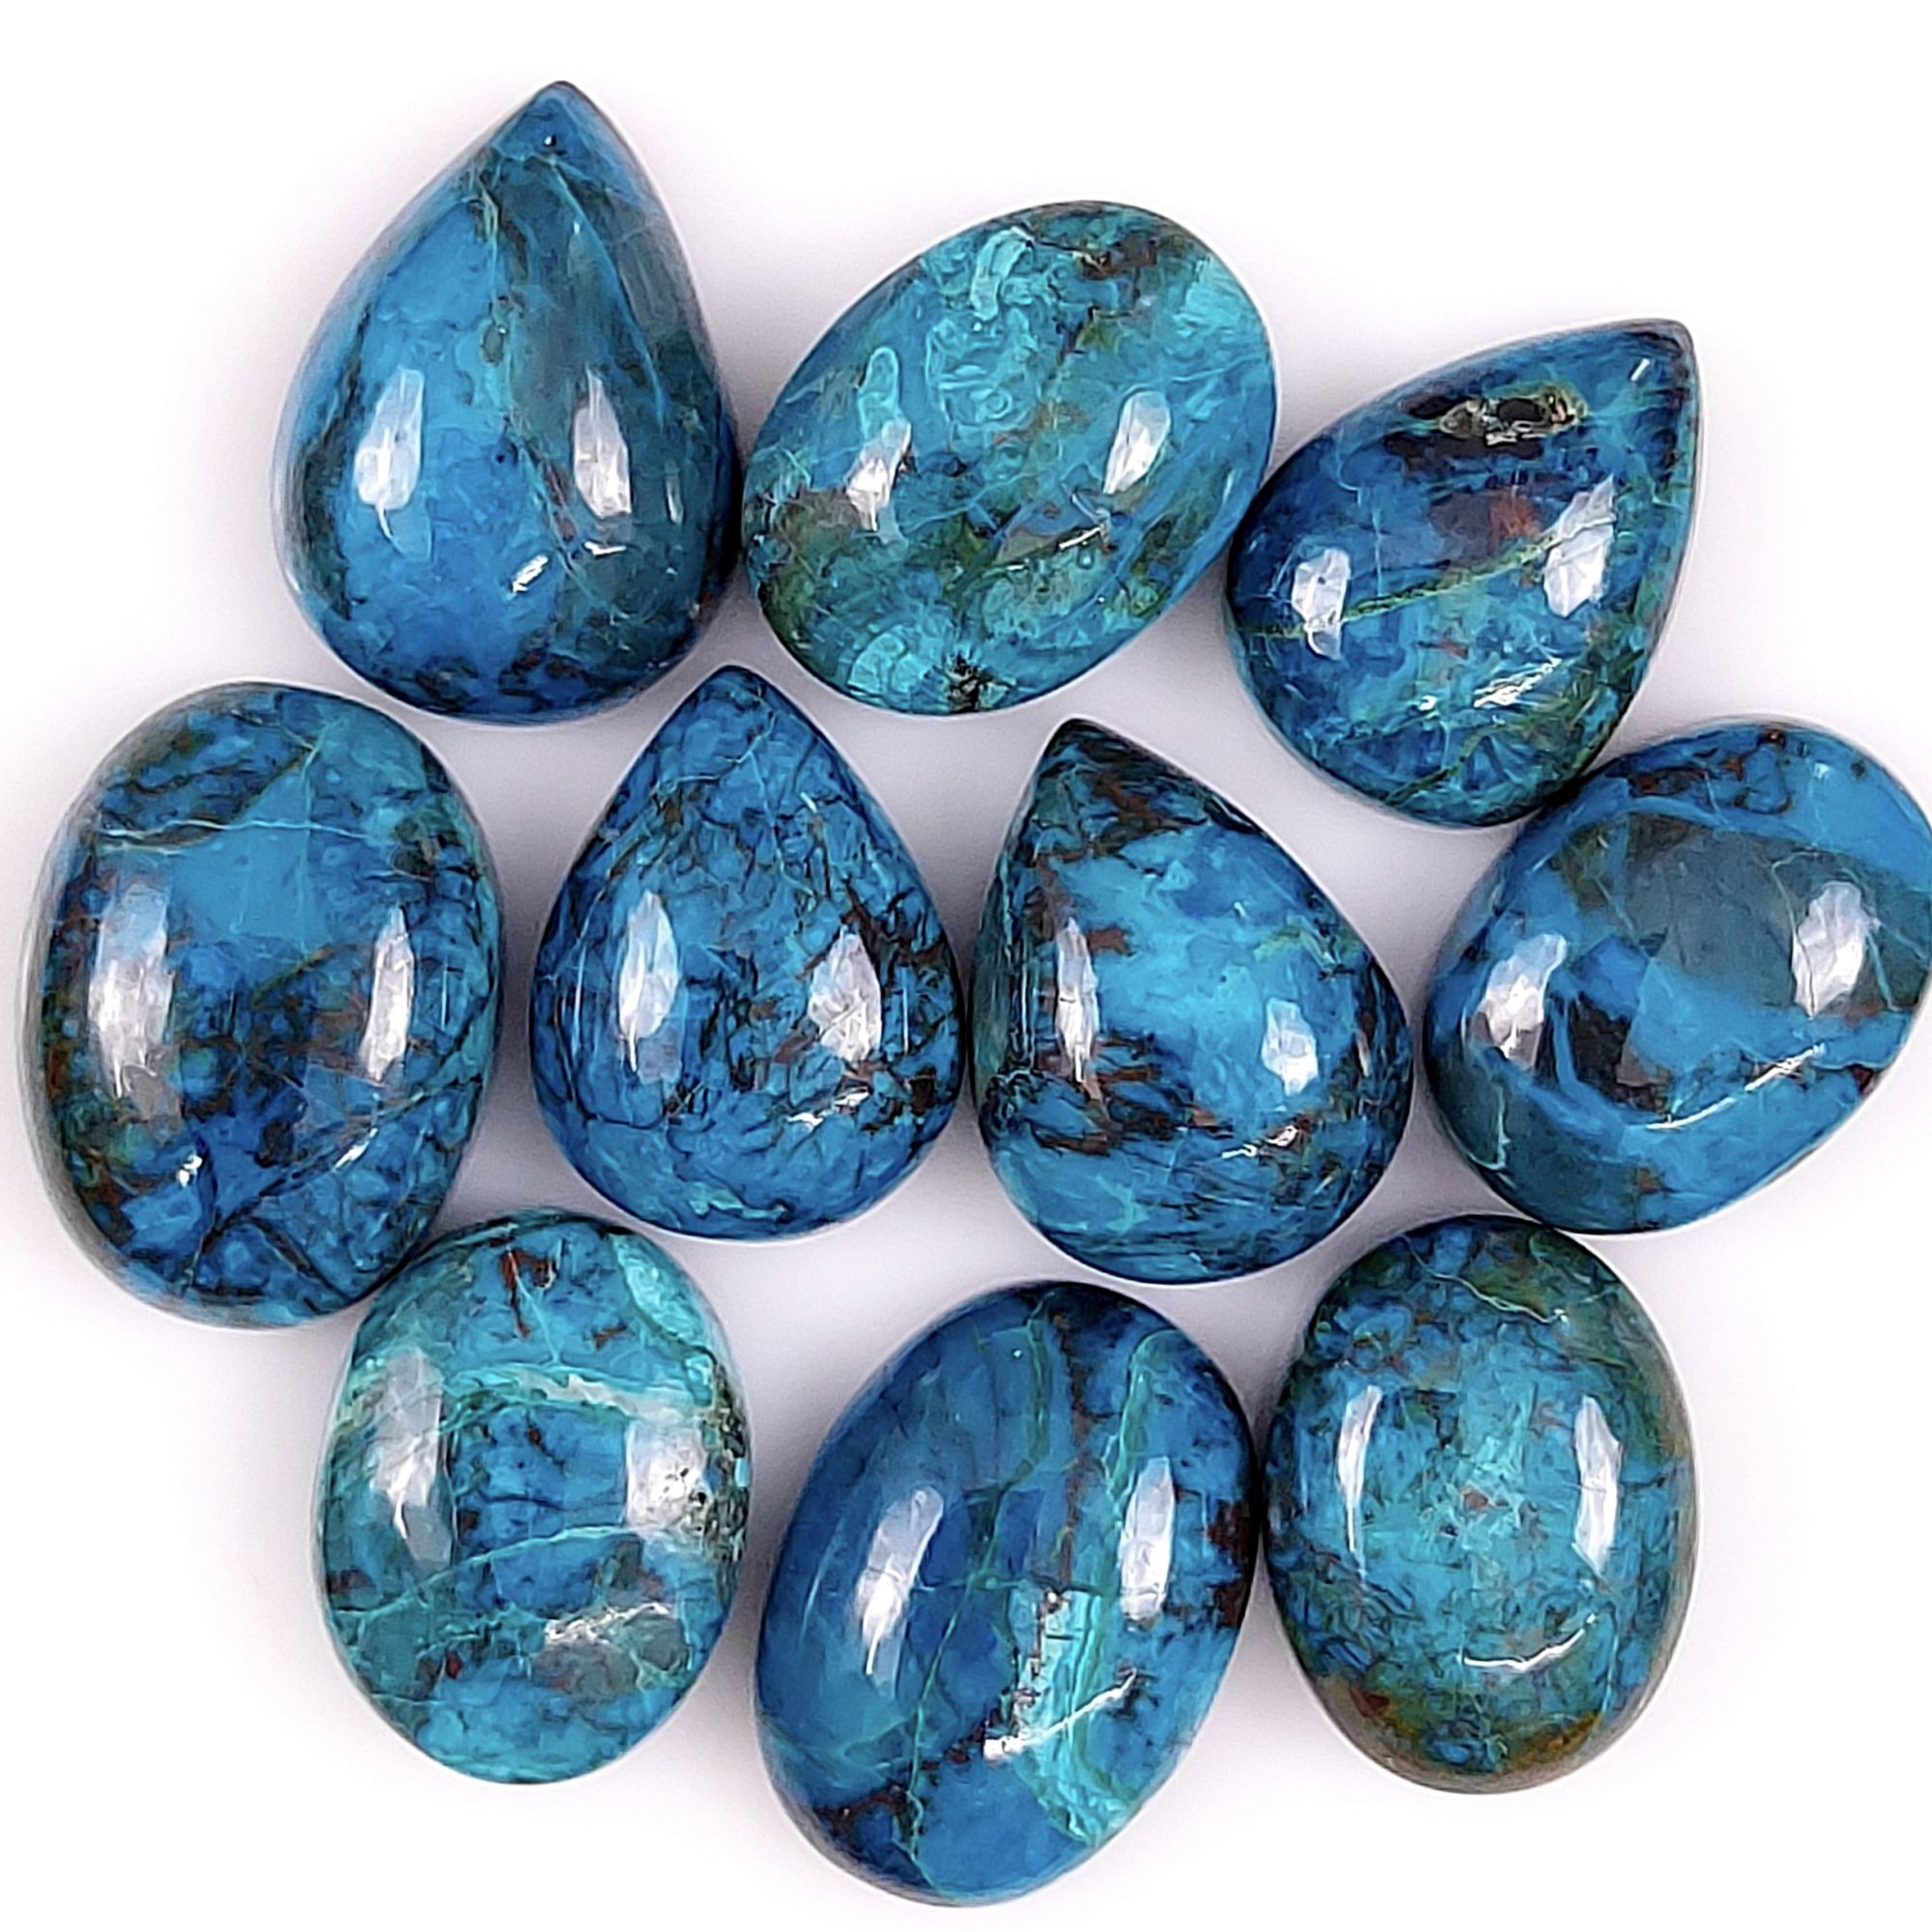 10 Pcs 116Cts Natural Chrysocolla Cabochon Lot Healing stone crystal,Loose gemstones Chrysocolla Mix Shape & Size Jewelry making Gemstone 17x14 6x12mm #5738